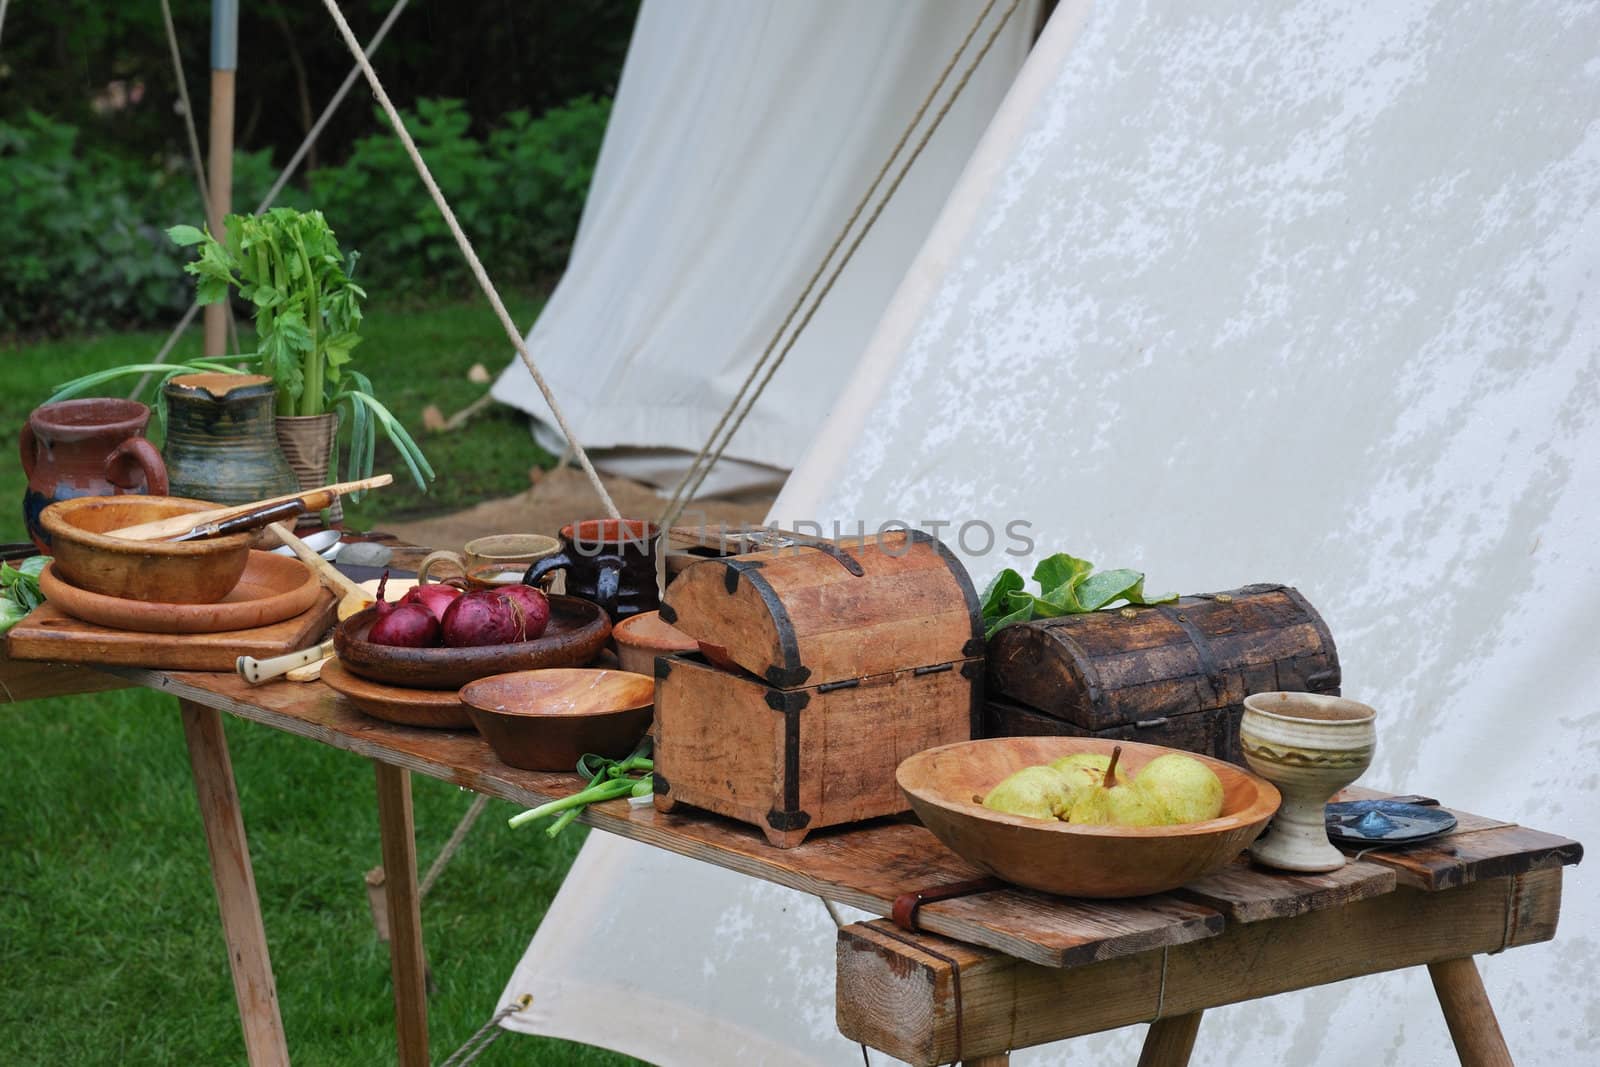 Medieval table of food